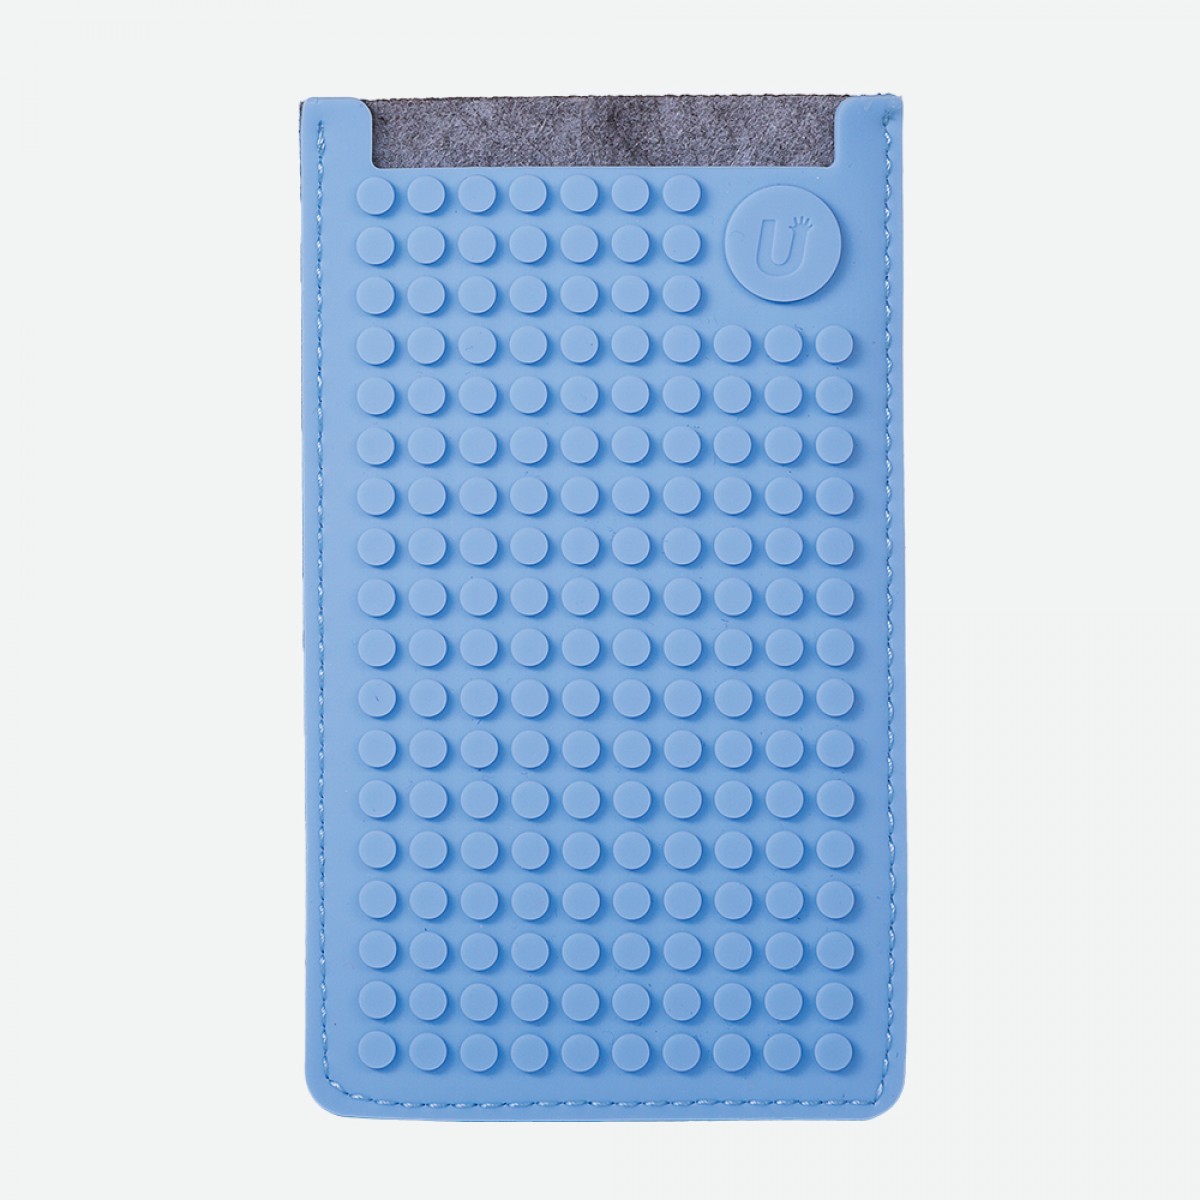 UPixel כיסוי פיקסלים קטן לטלפון - כחול